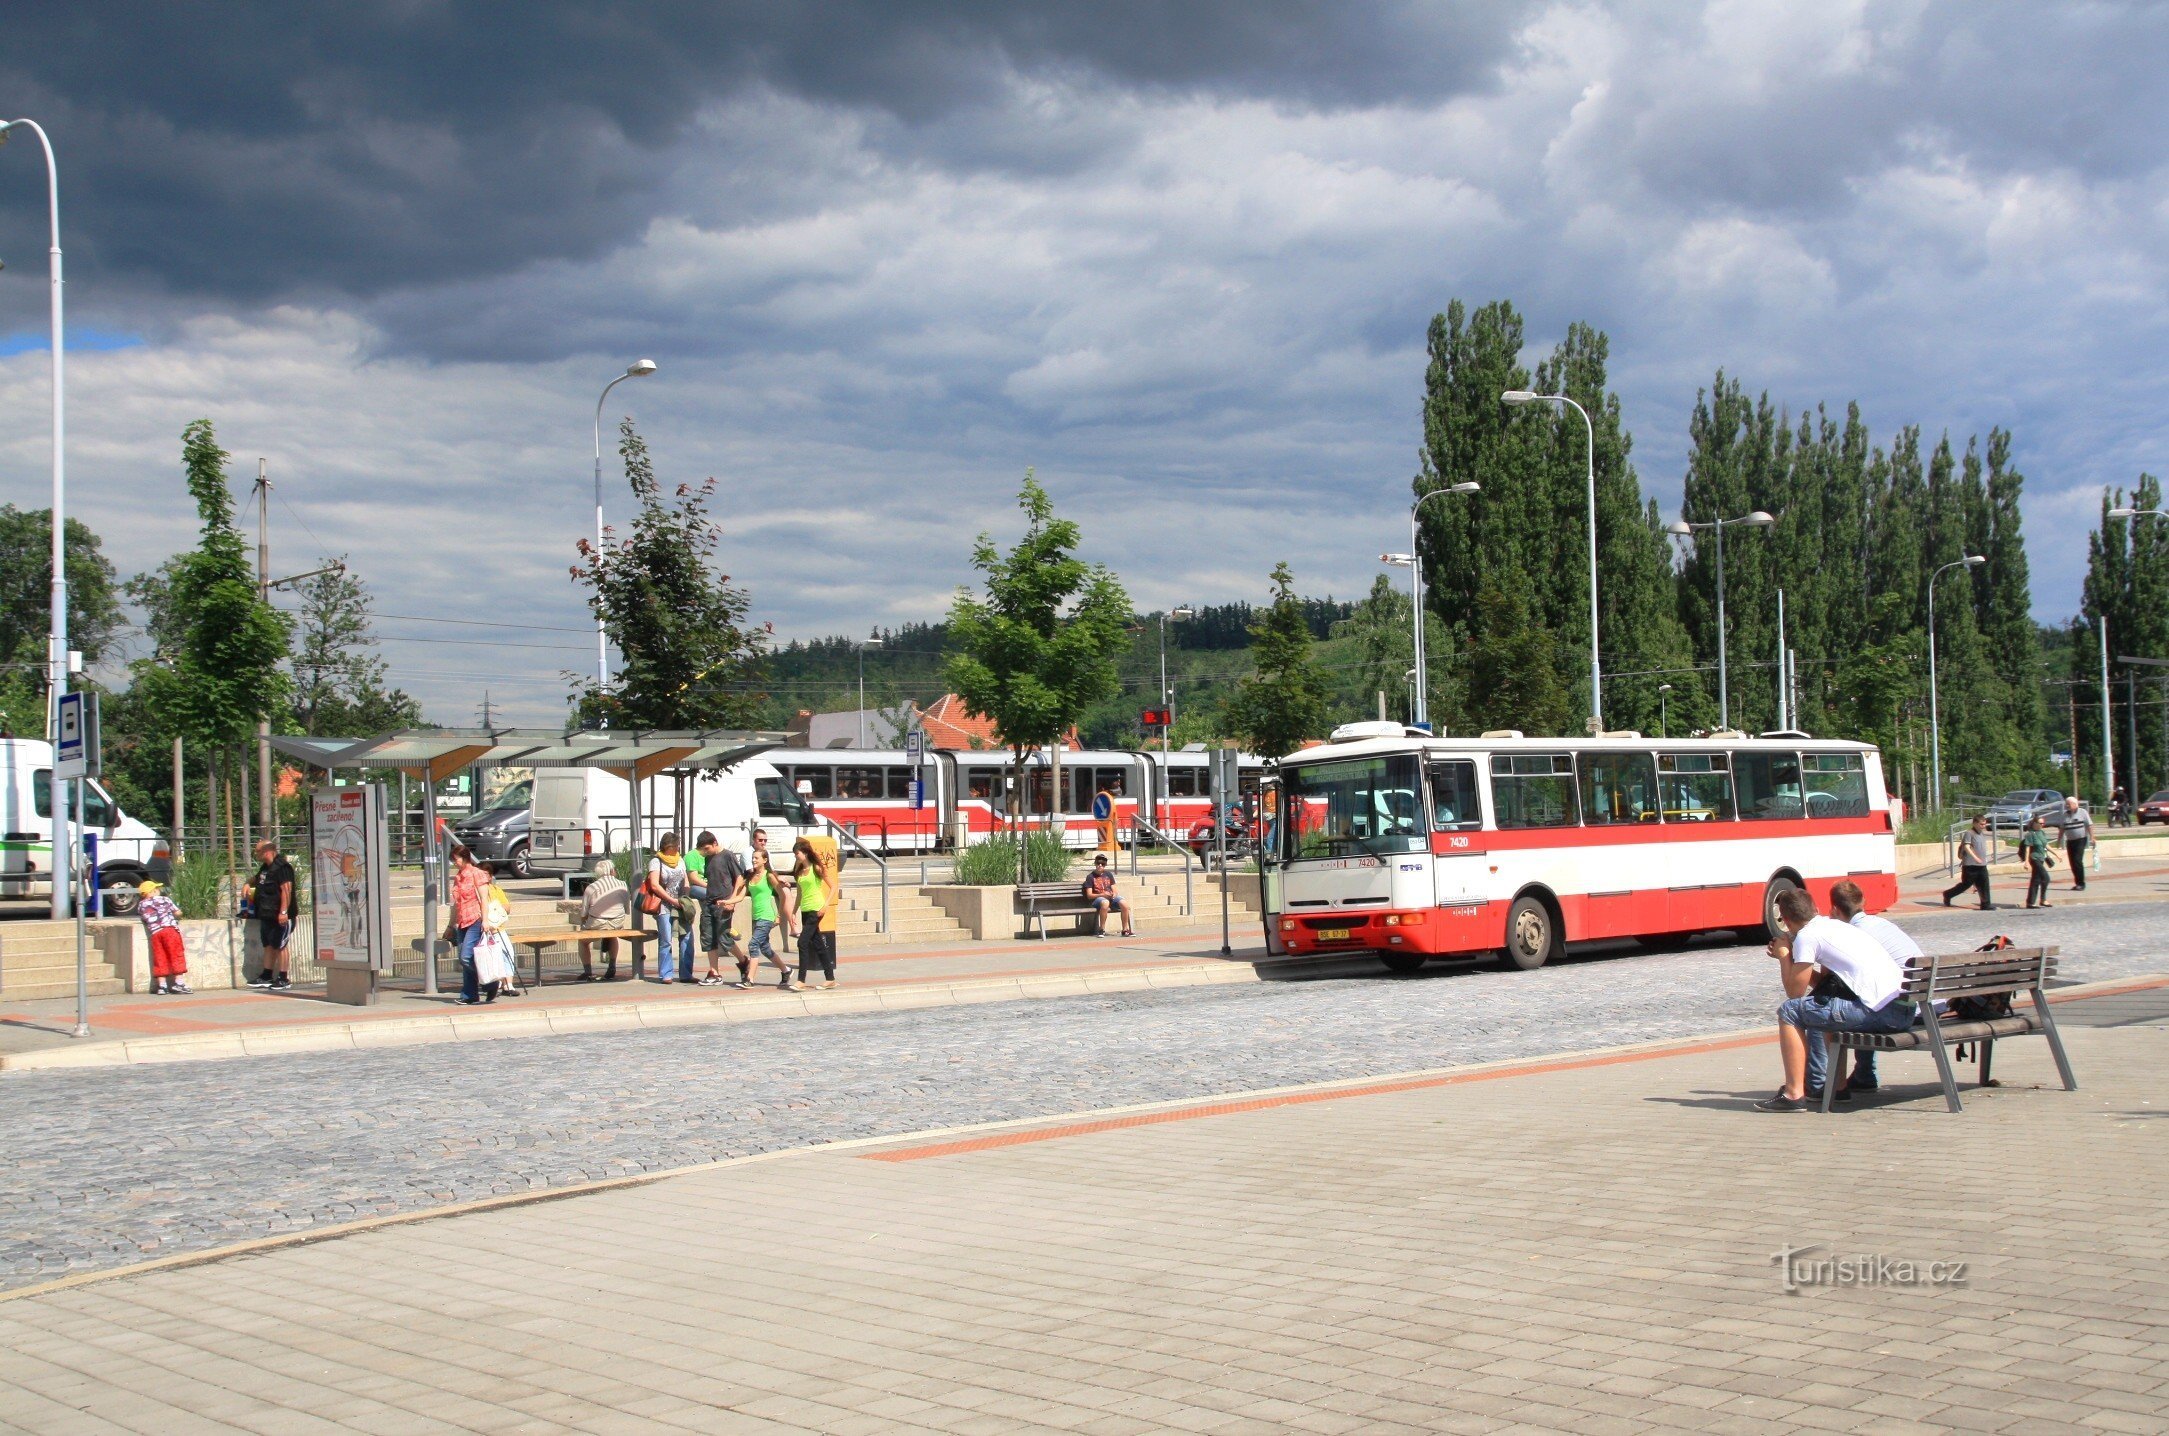 Terminal de transport public Bystrica